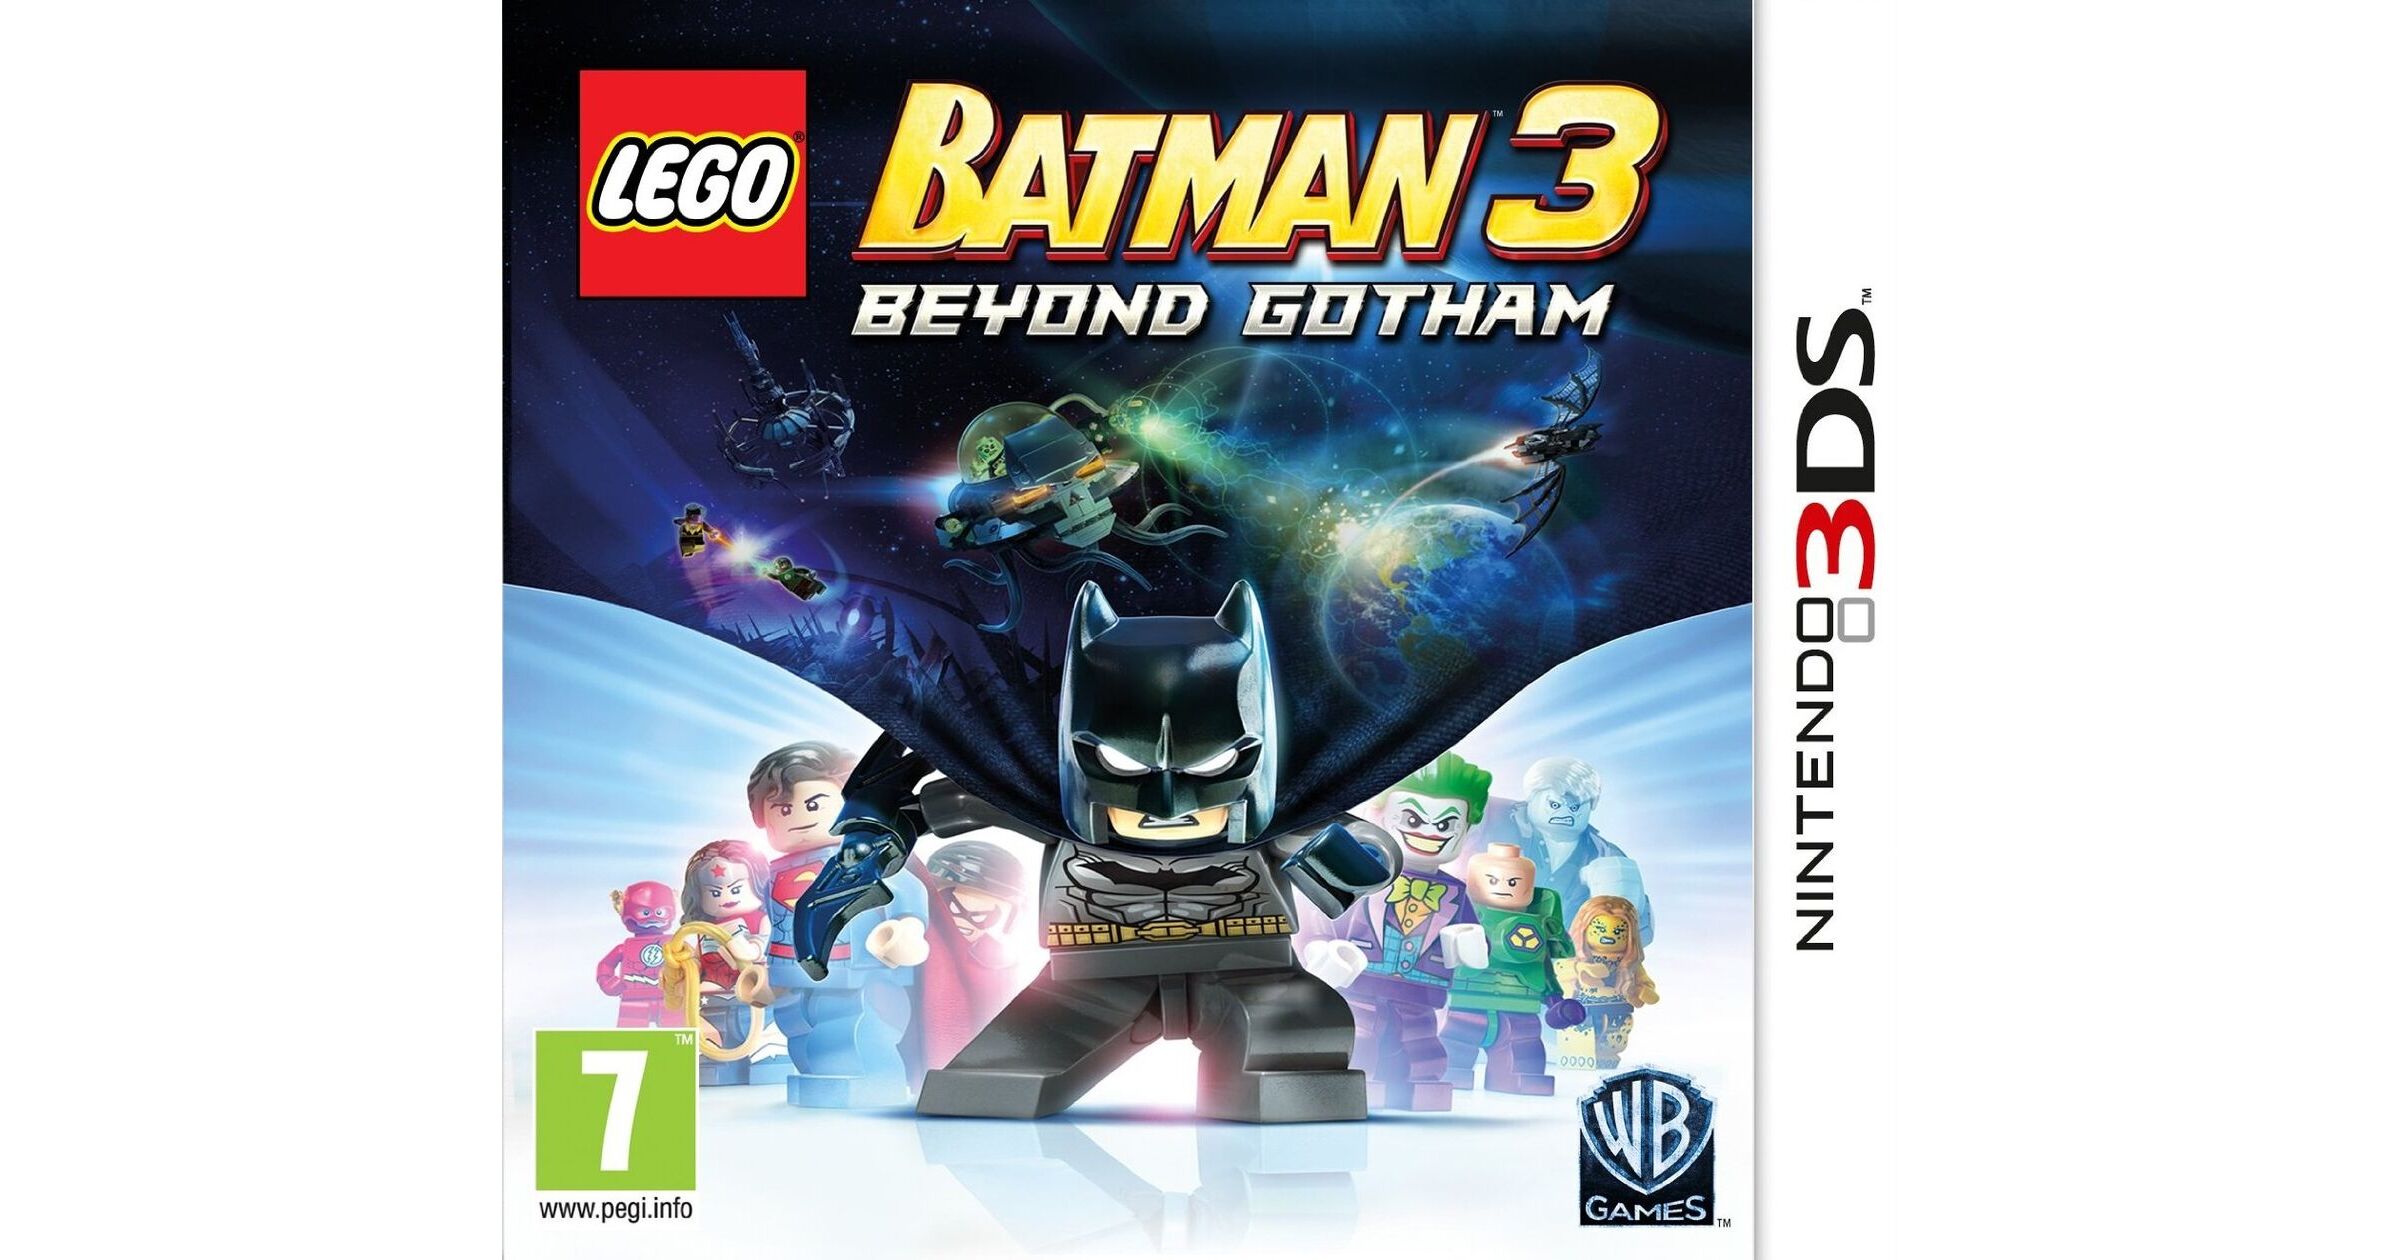 lego-batman-3-beyond-gotham-nintendo